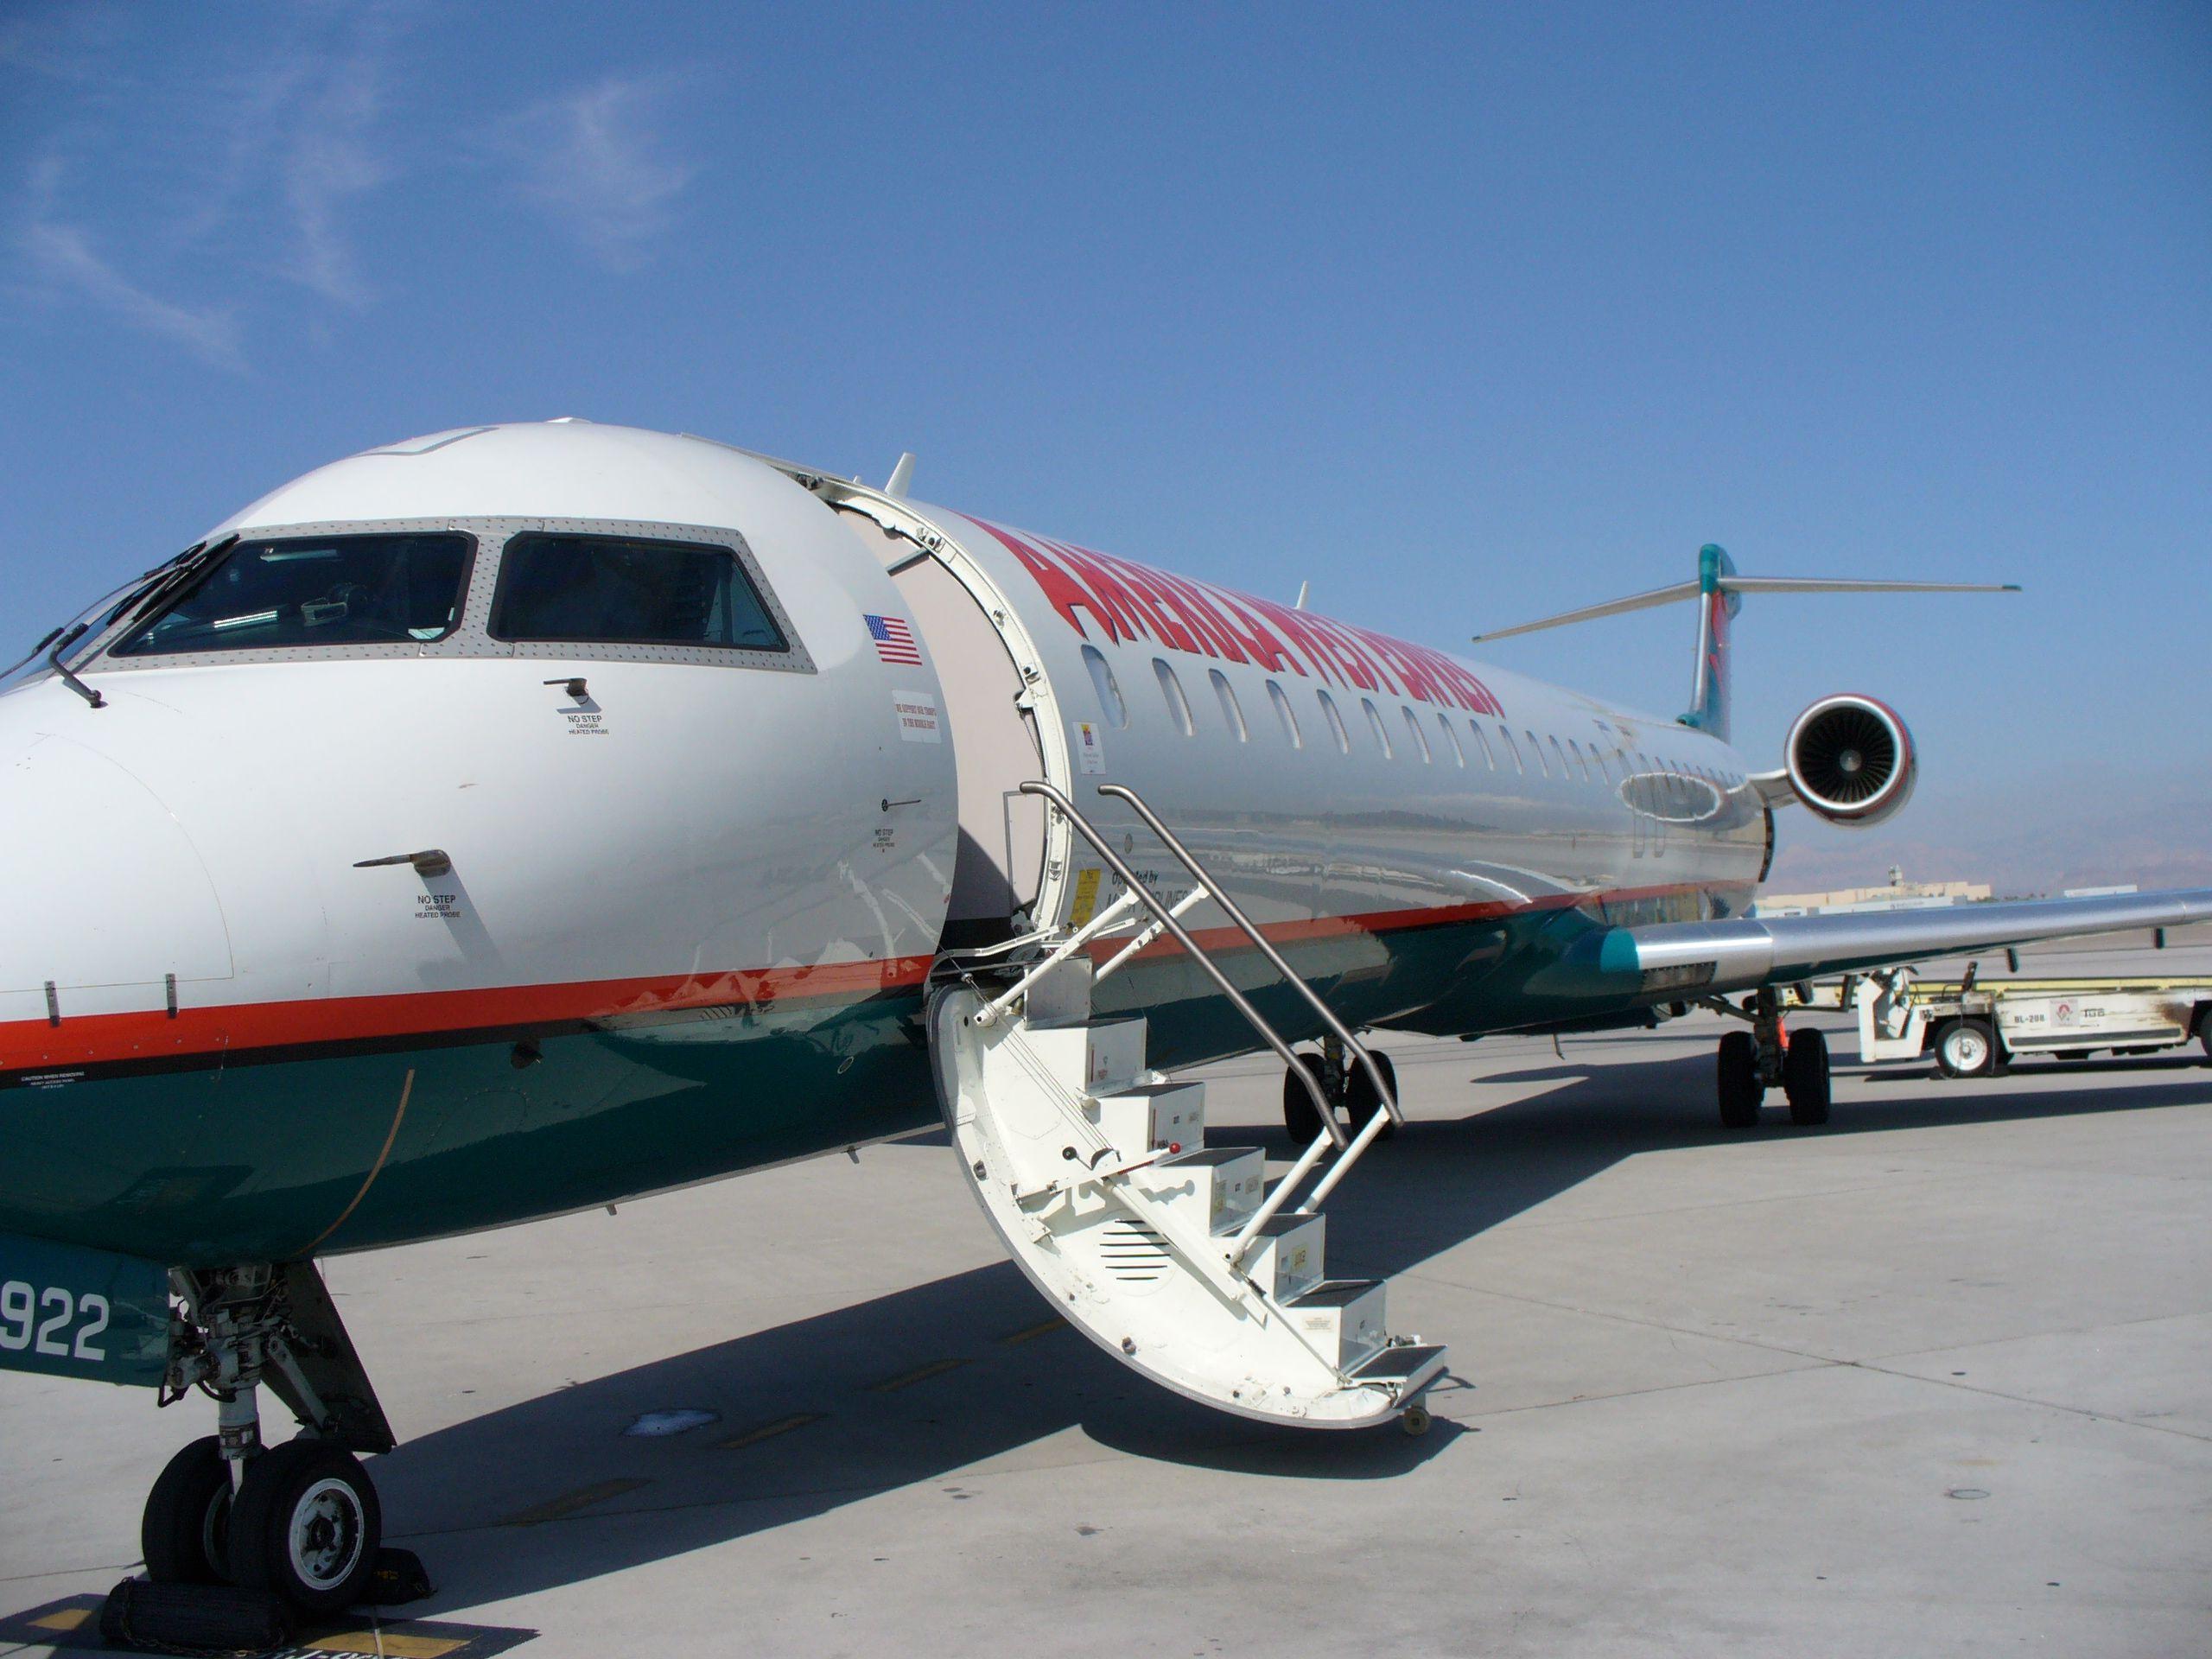 Bombardier Celebrates Endeavor Air's CRJ900 NextGen Regional Jet